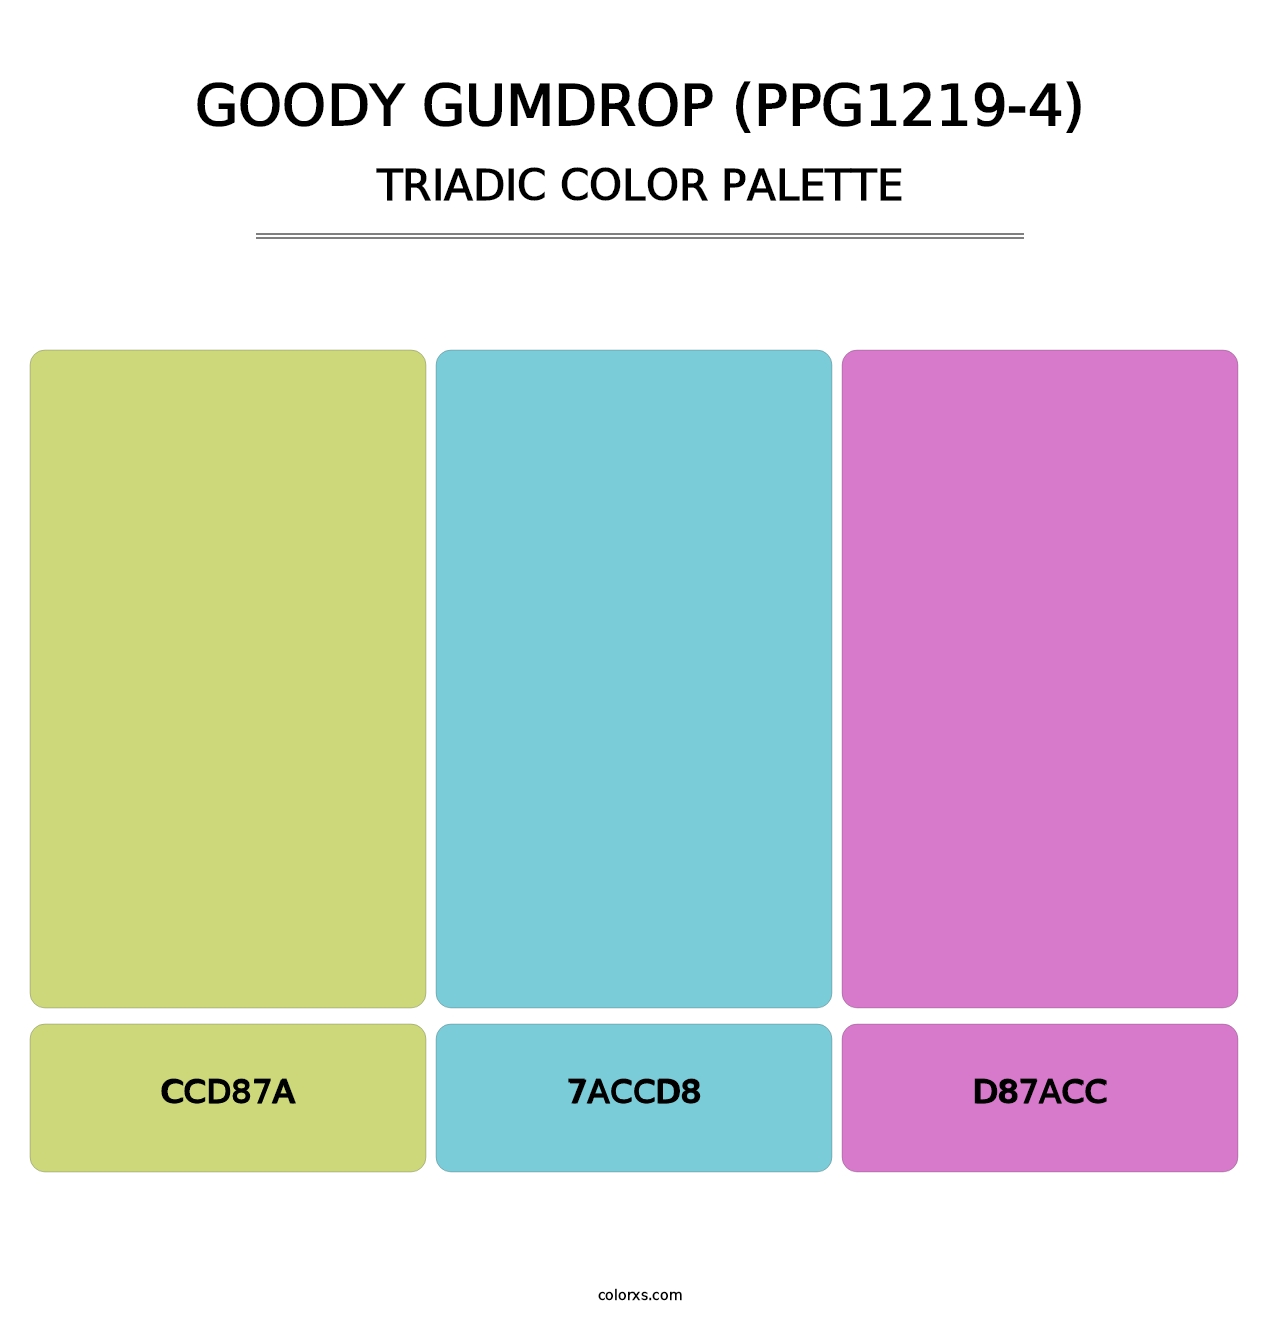 Goody Gumdrop (PPG1219-4) - Triadic Color Palette